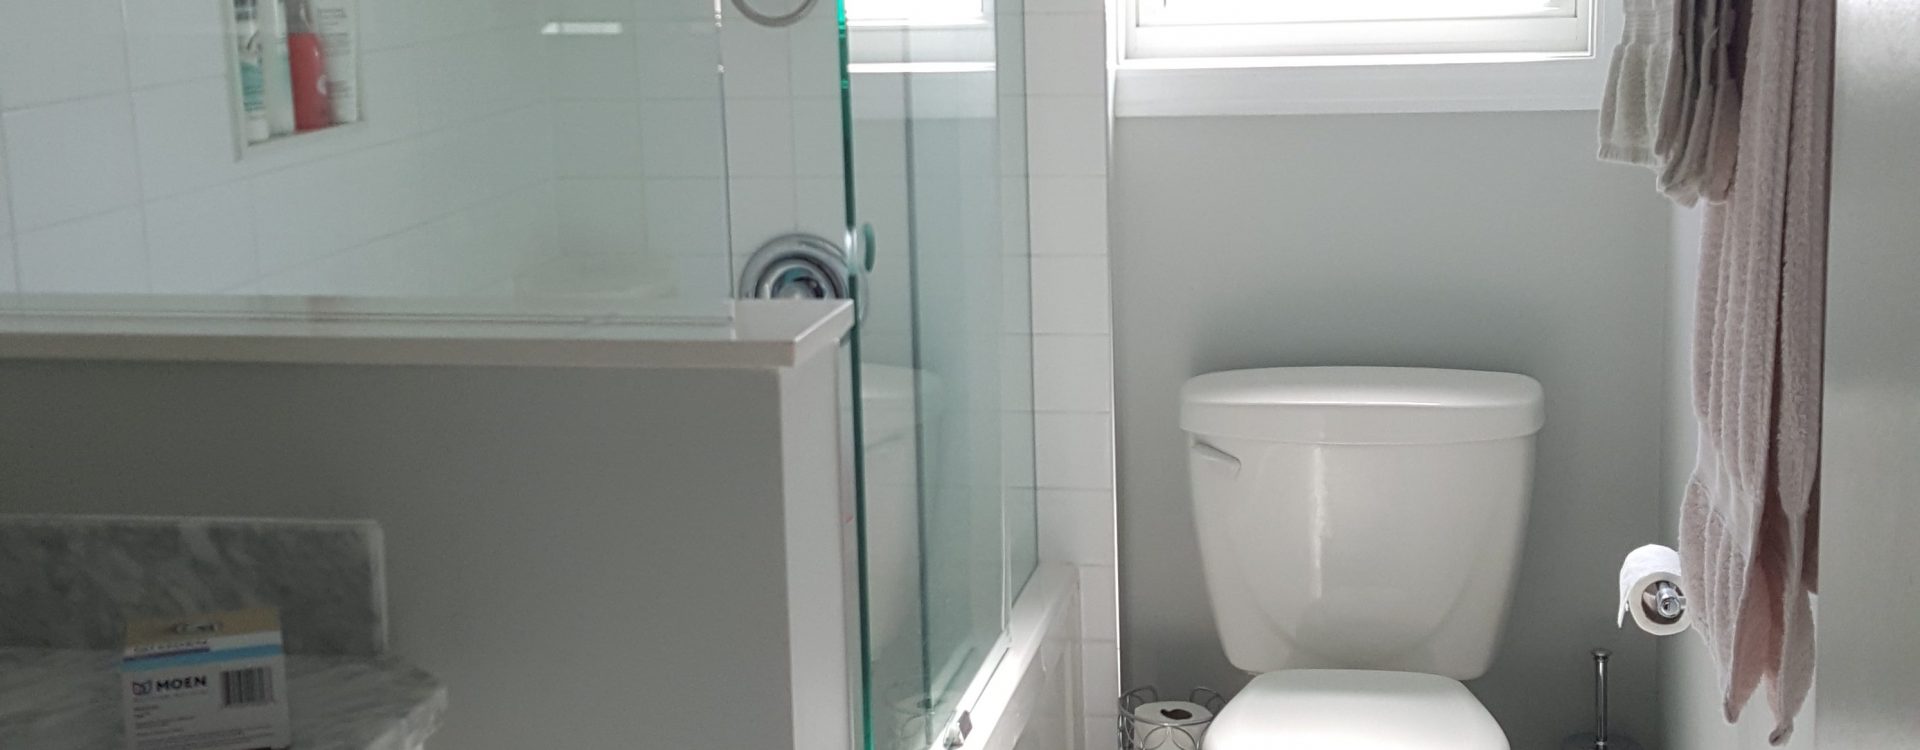 bathroom renovations durham region